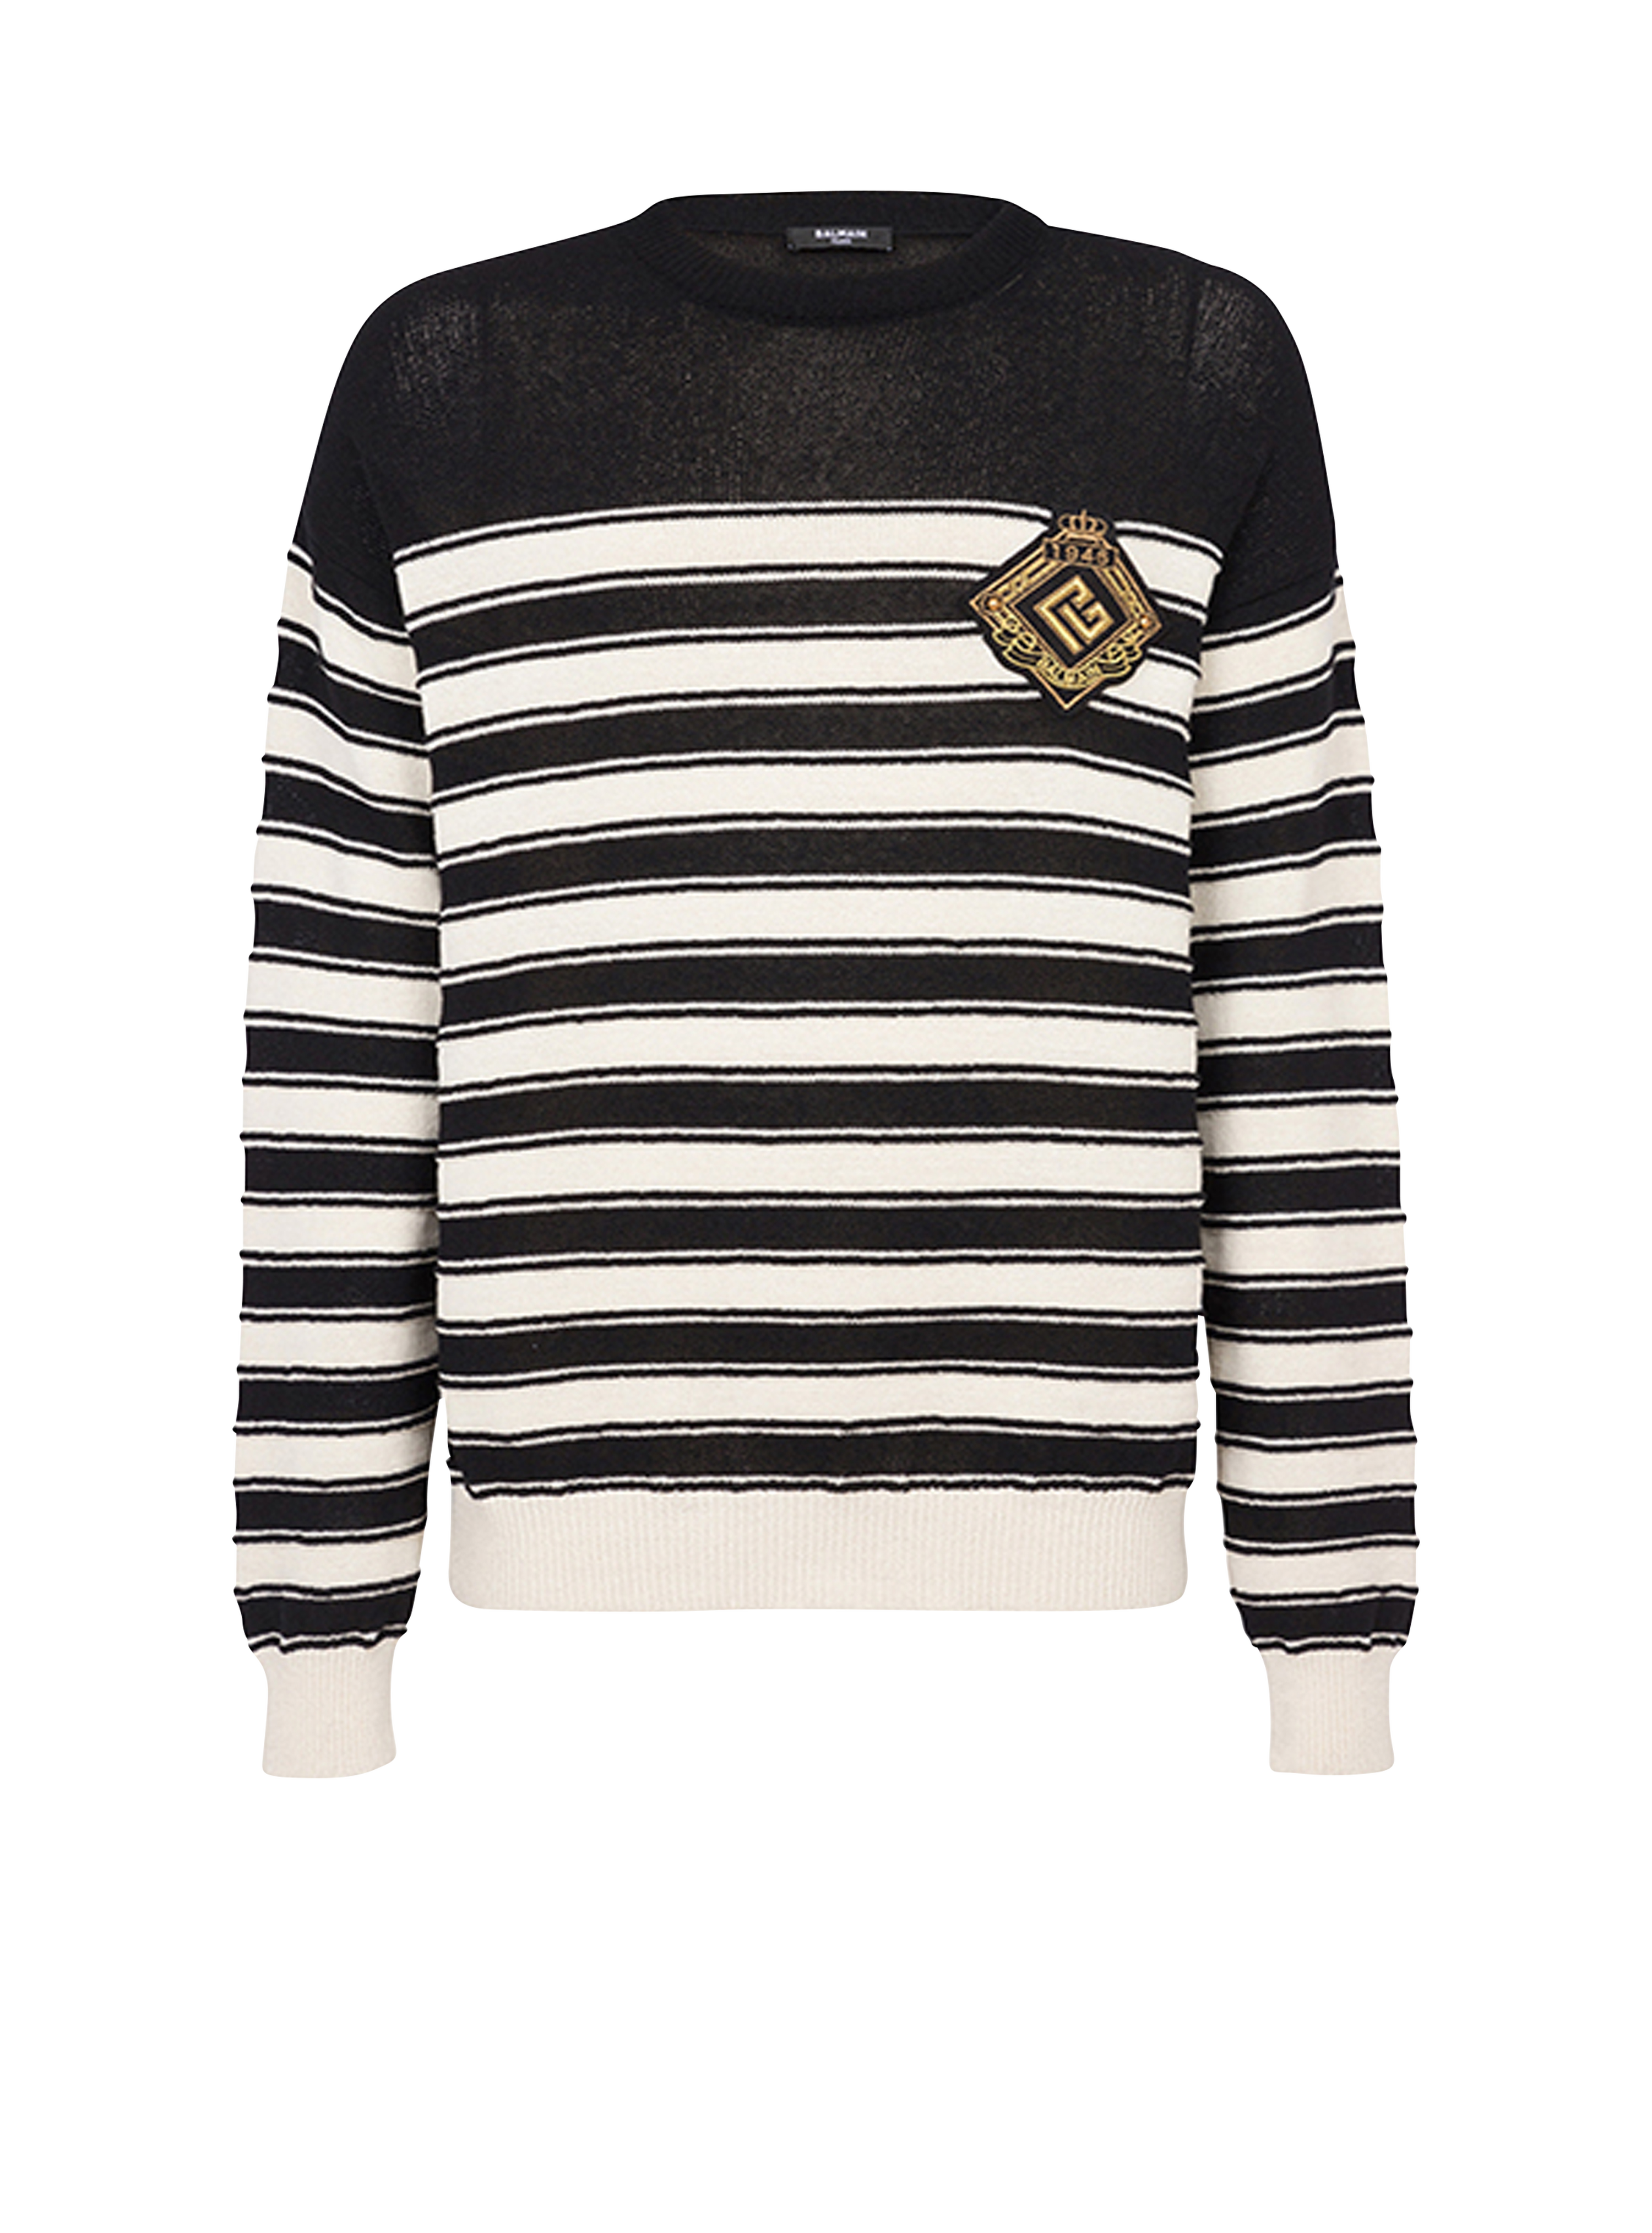 Nautical knit sweater with Balmain badge, black